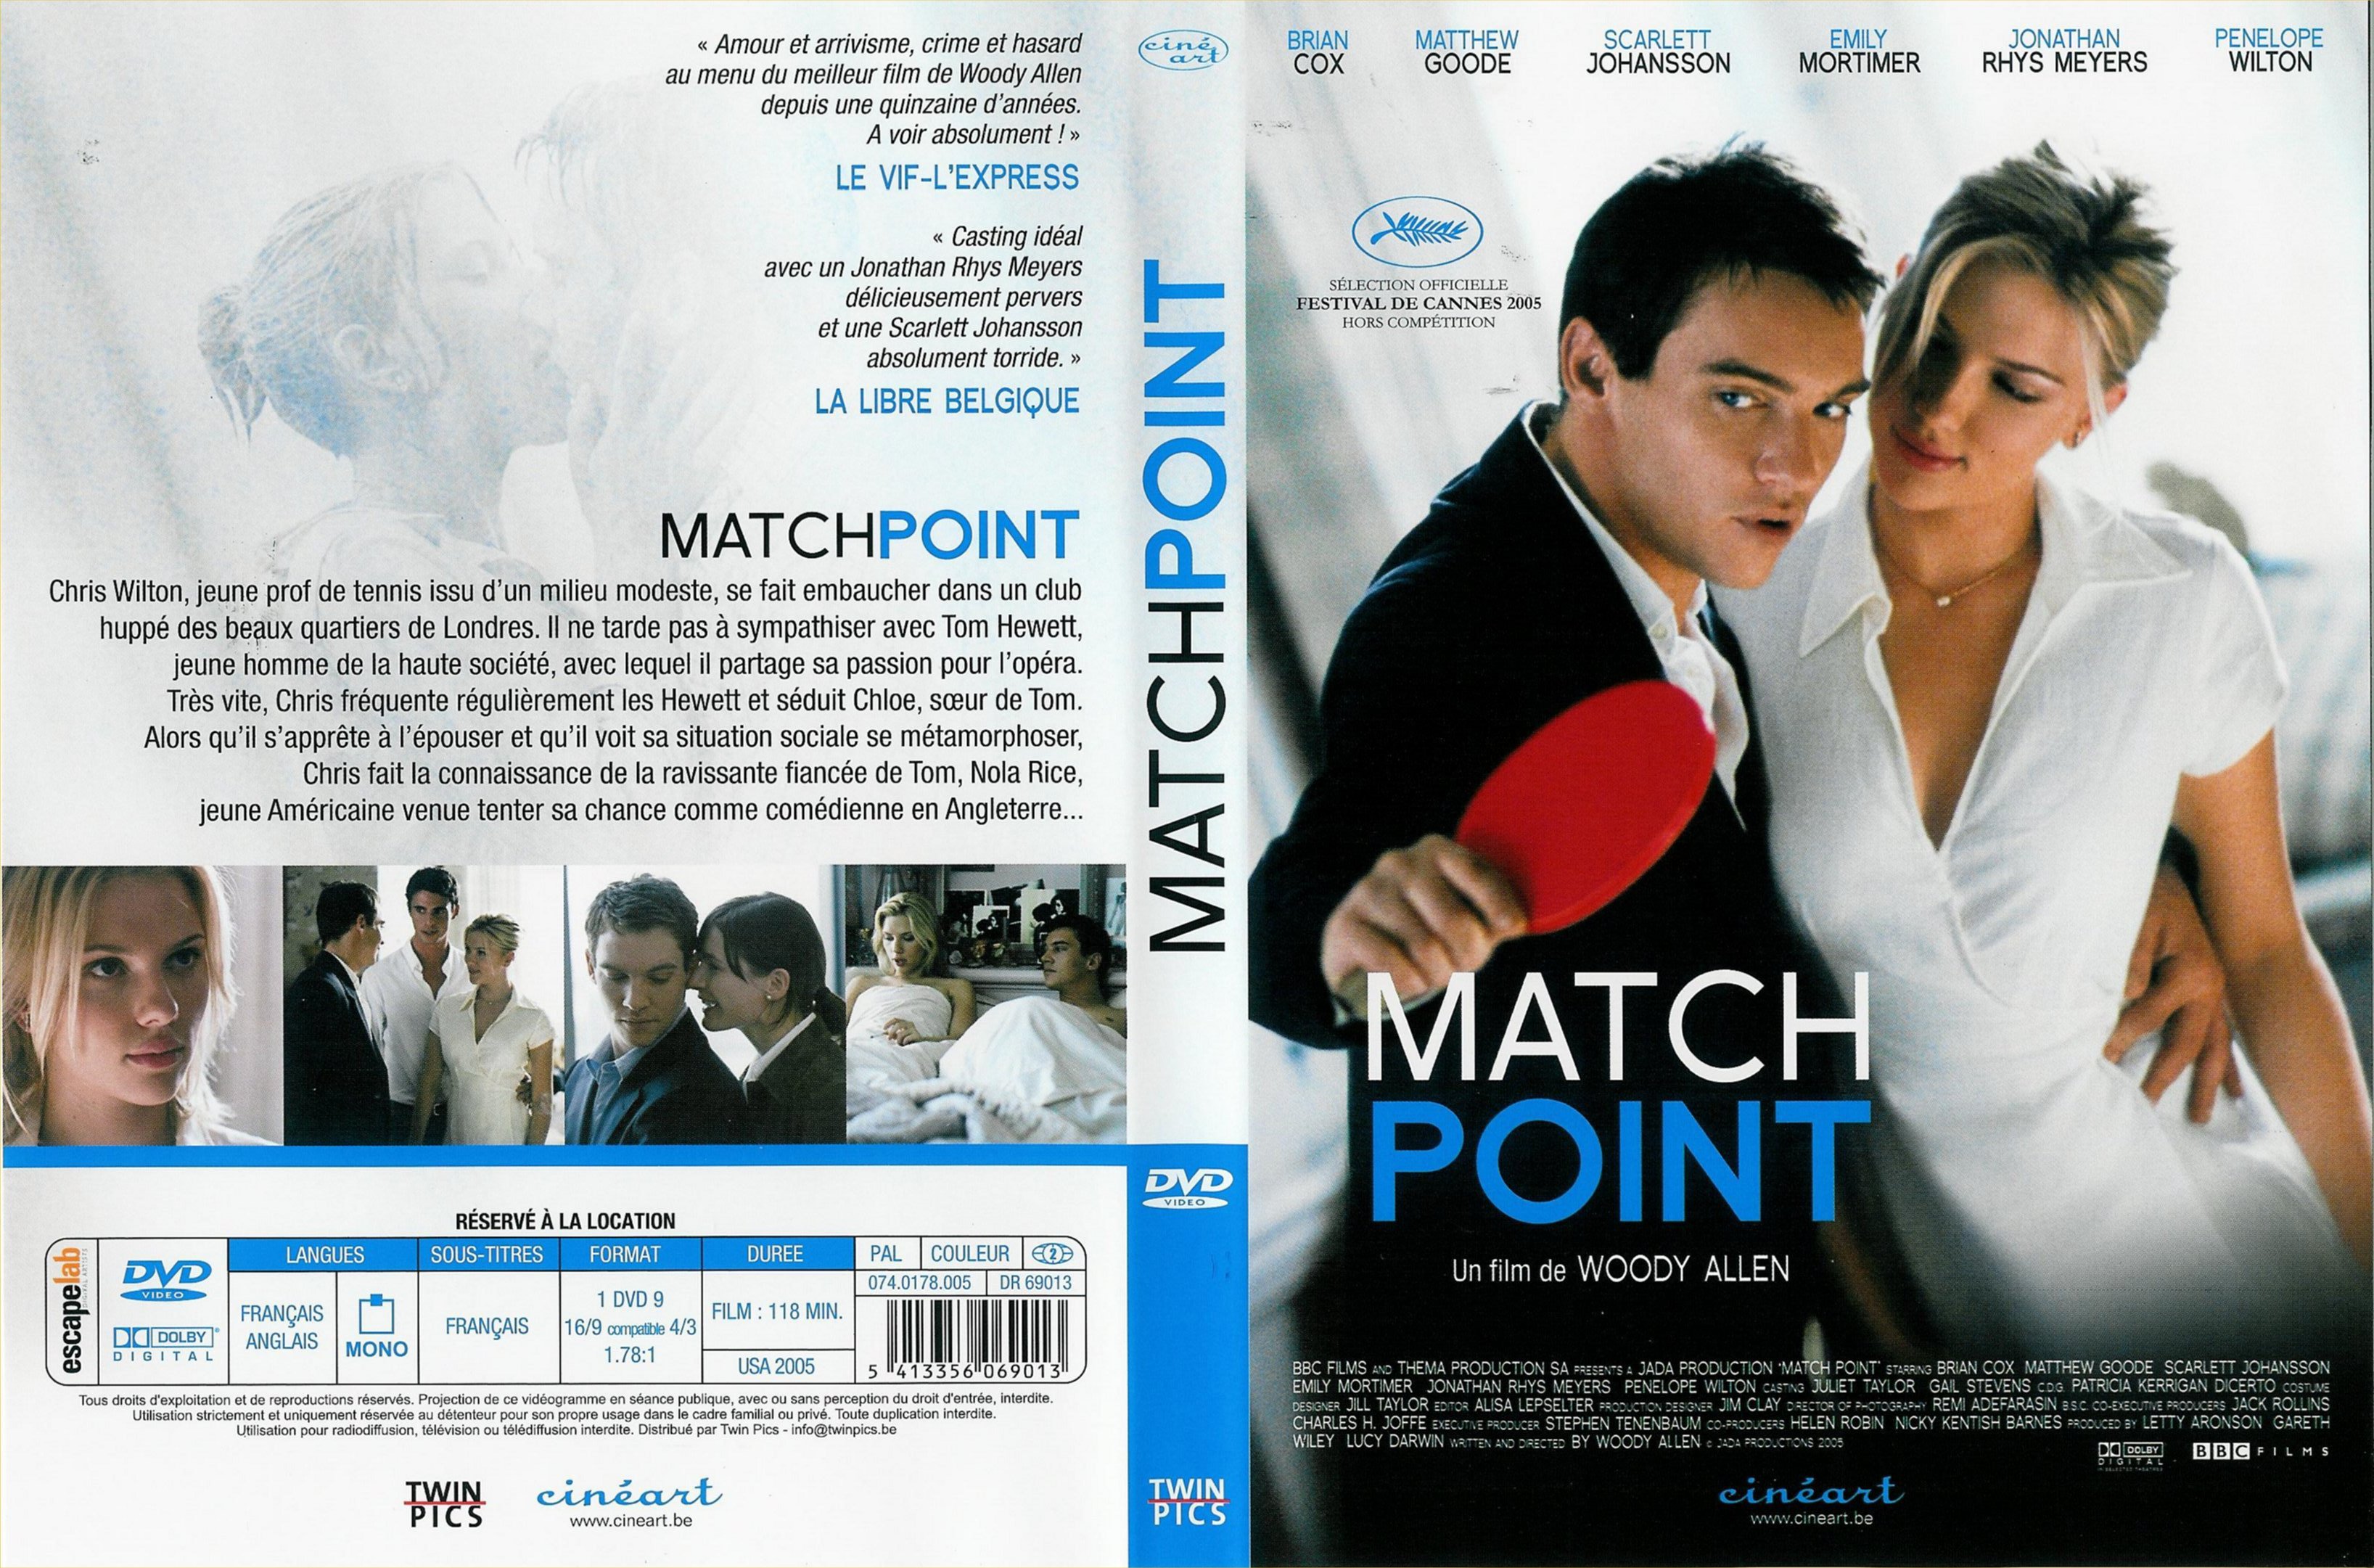 Jaquette DVD Match Point v3